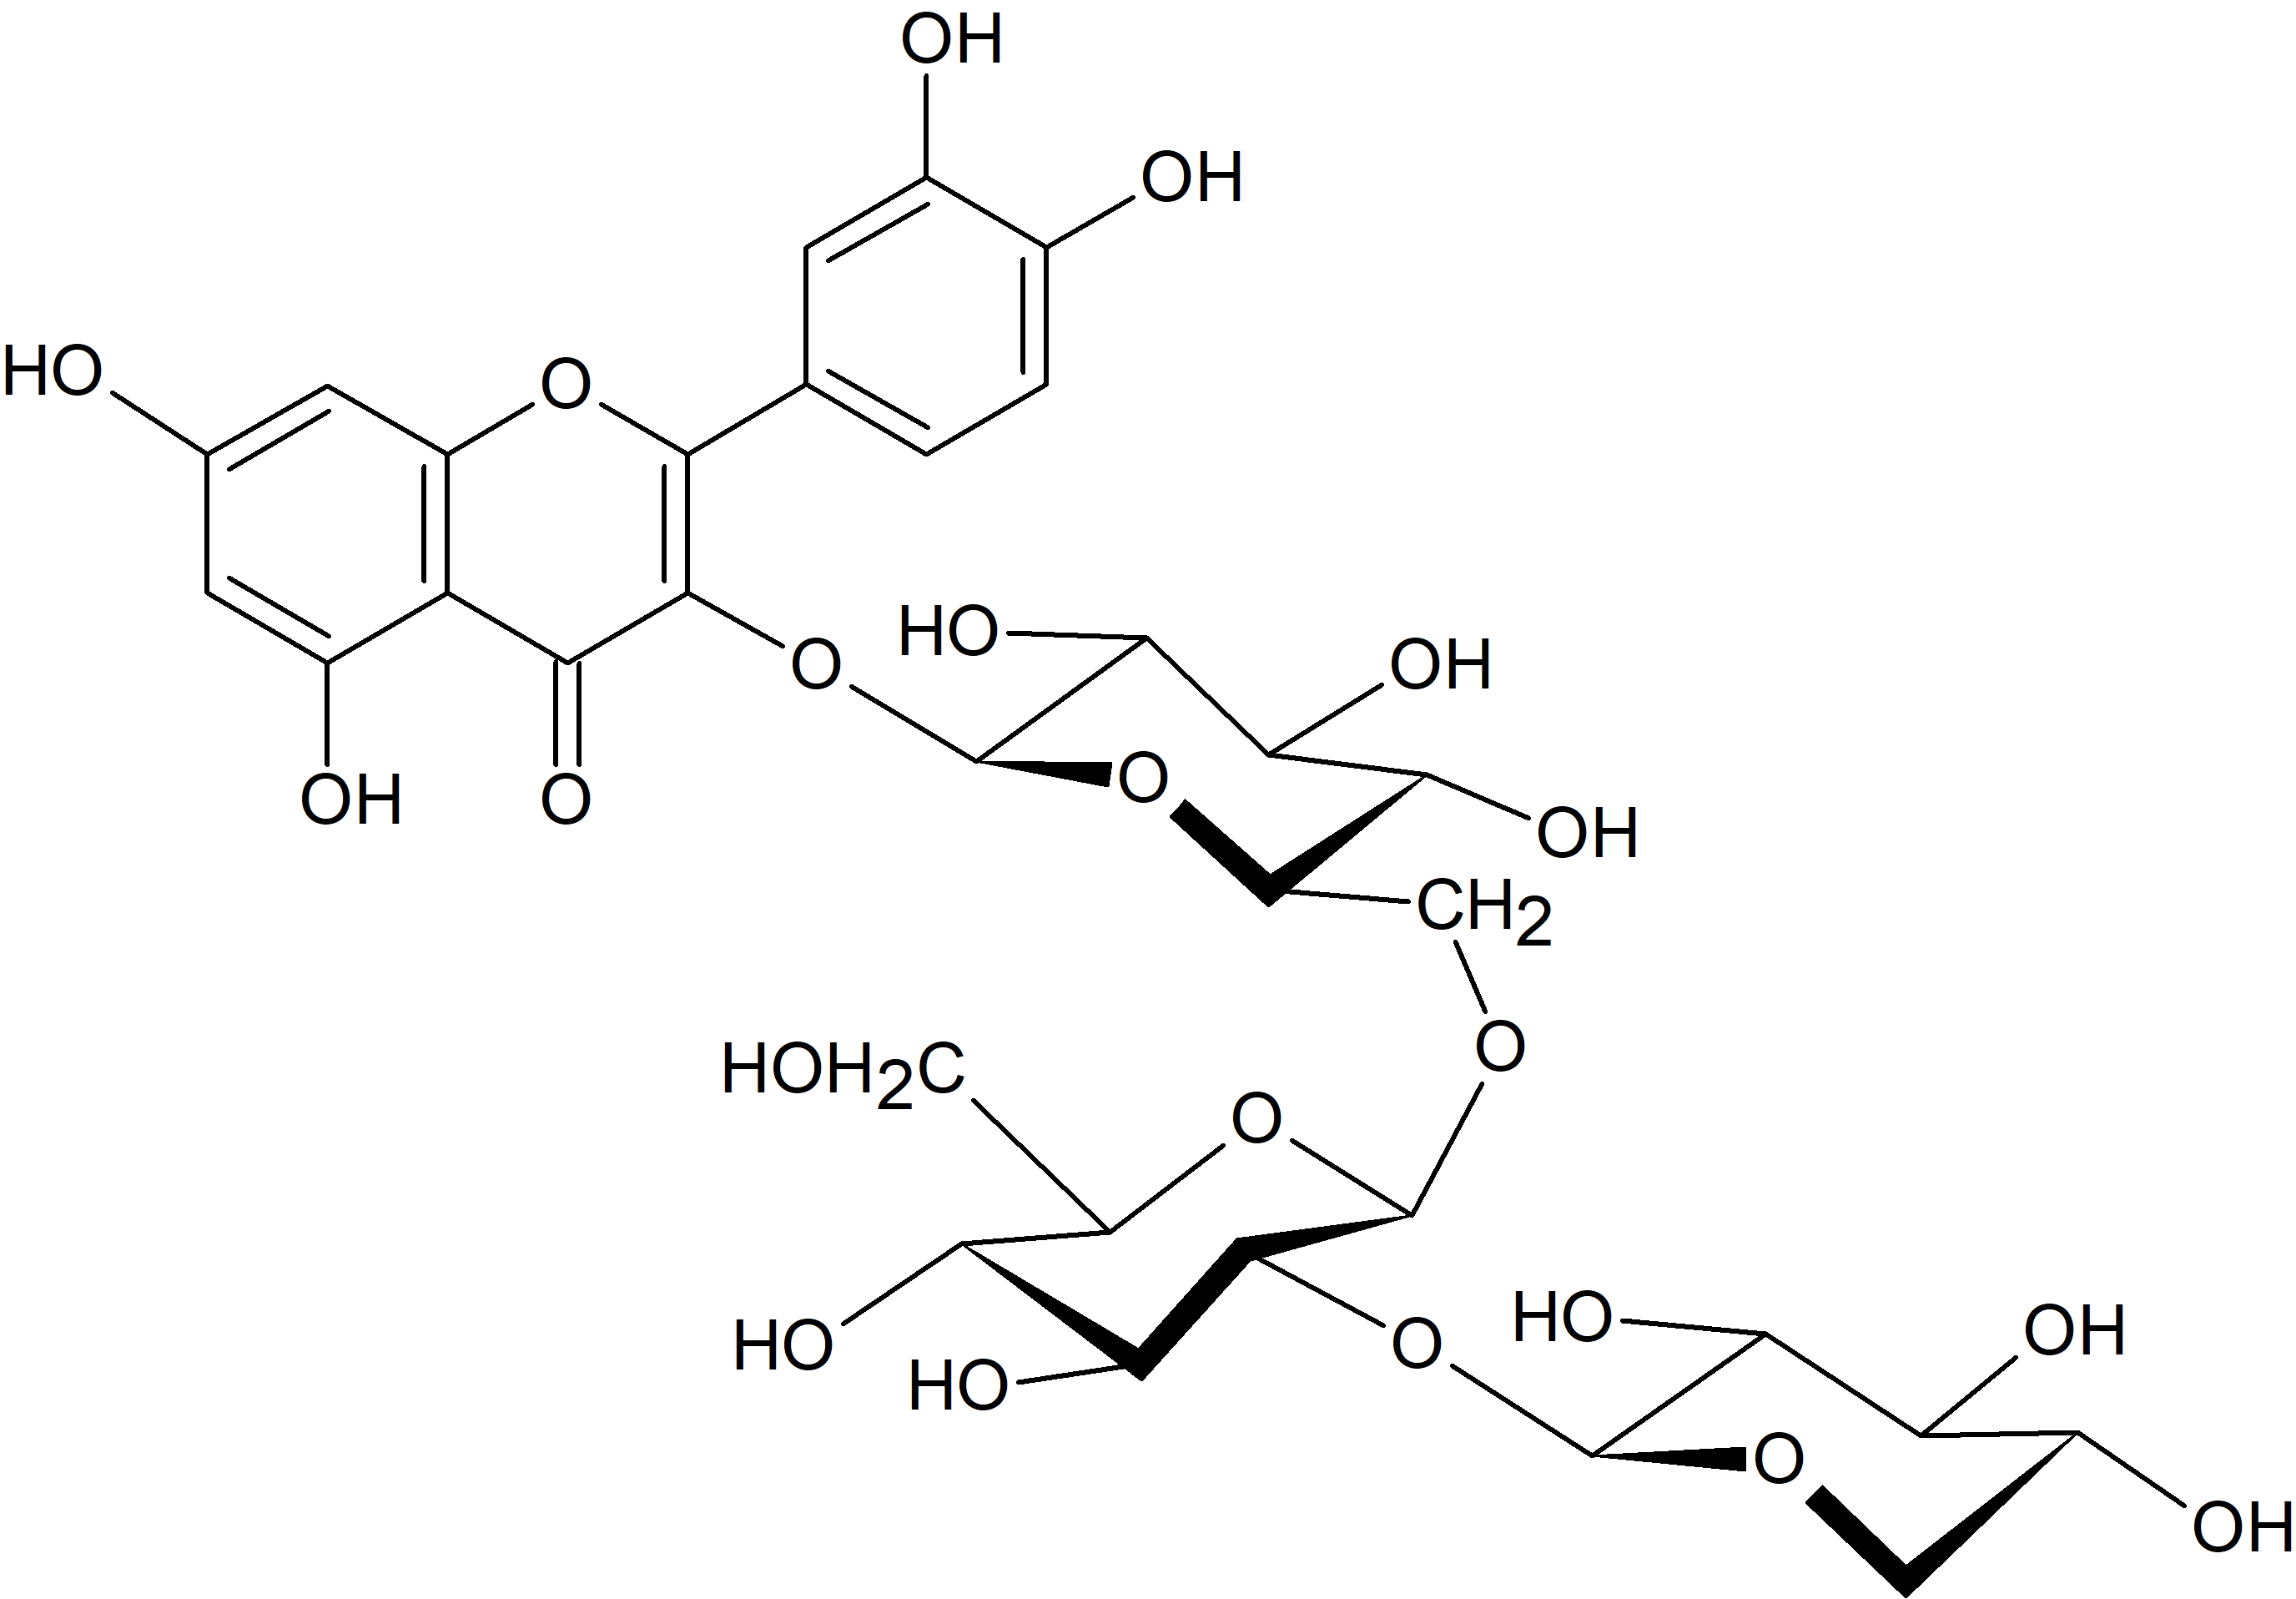 Quercetin 3-O-xylosyl-(1→2)-glucosyl-(1→6)-glucoside